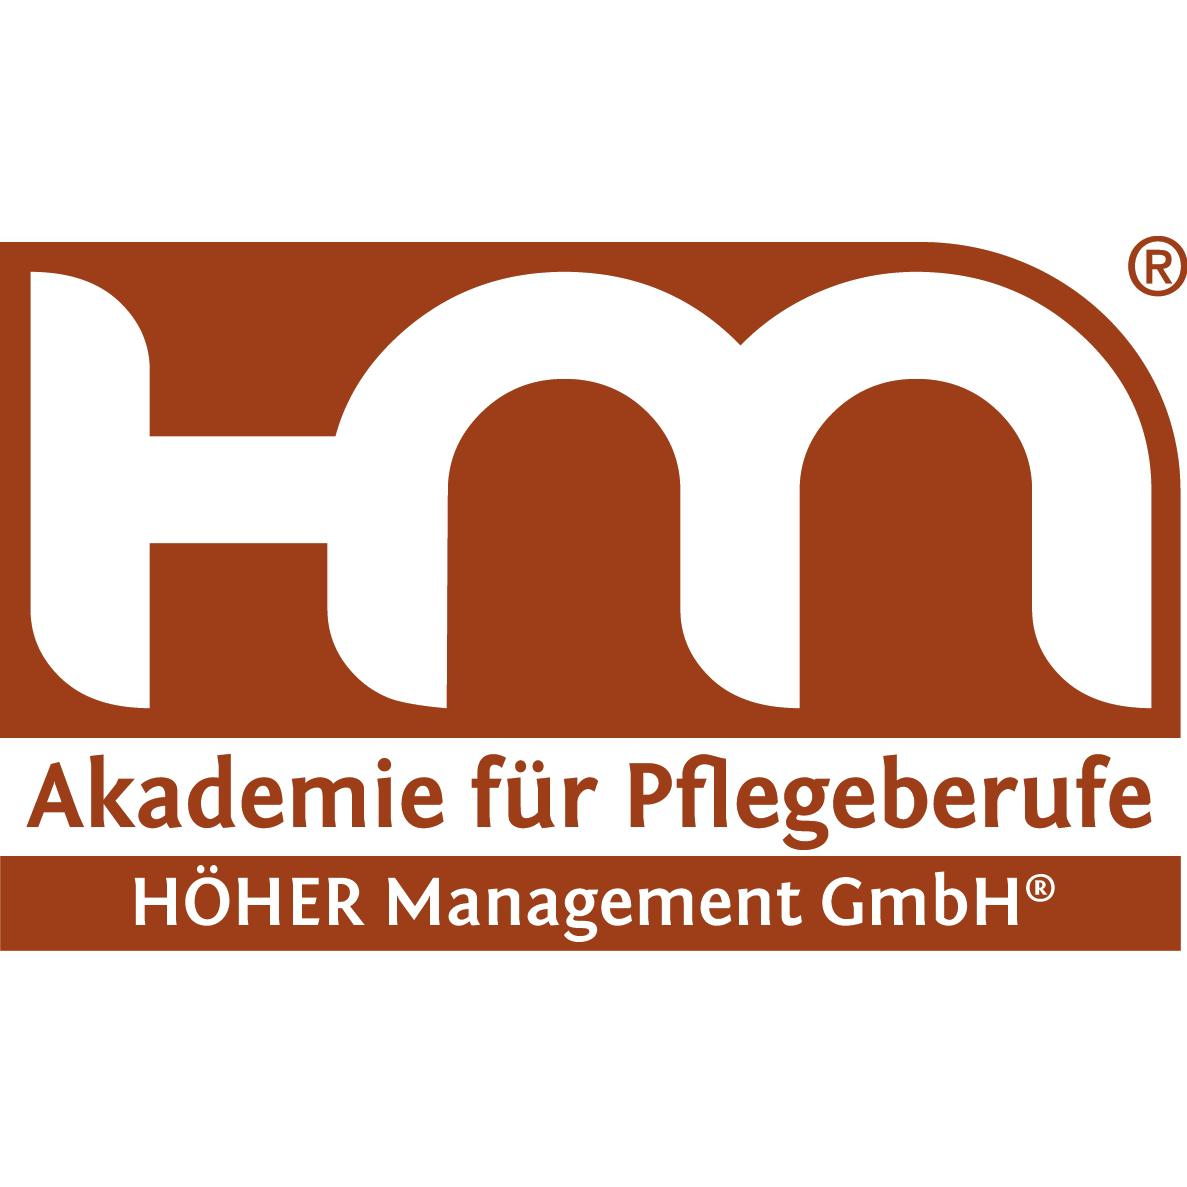 HÖHER Management GmbH & Co. KG. Logo